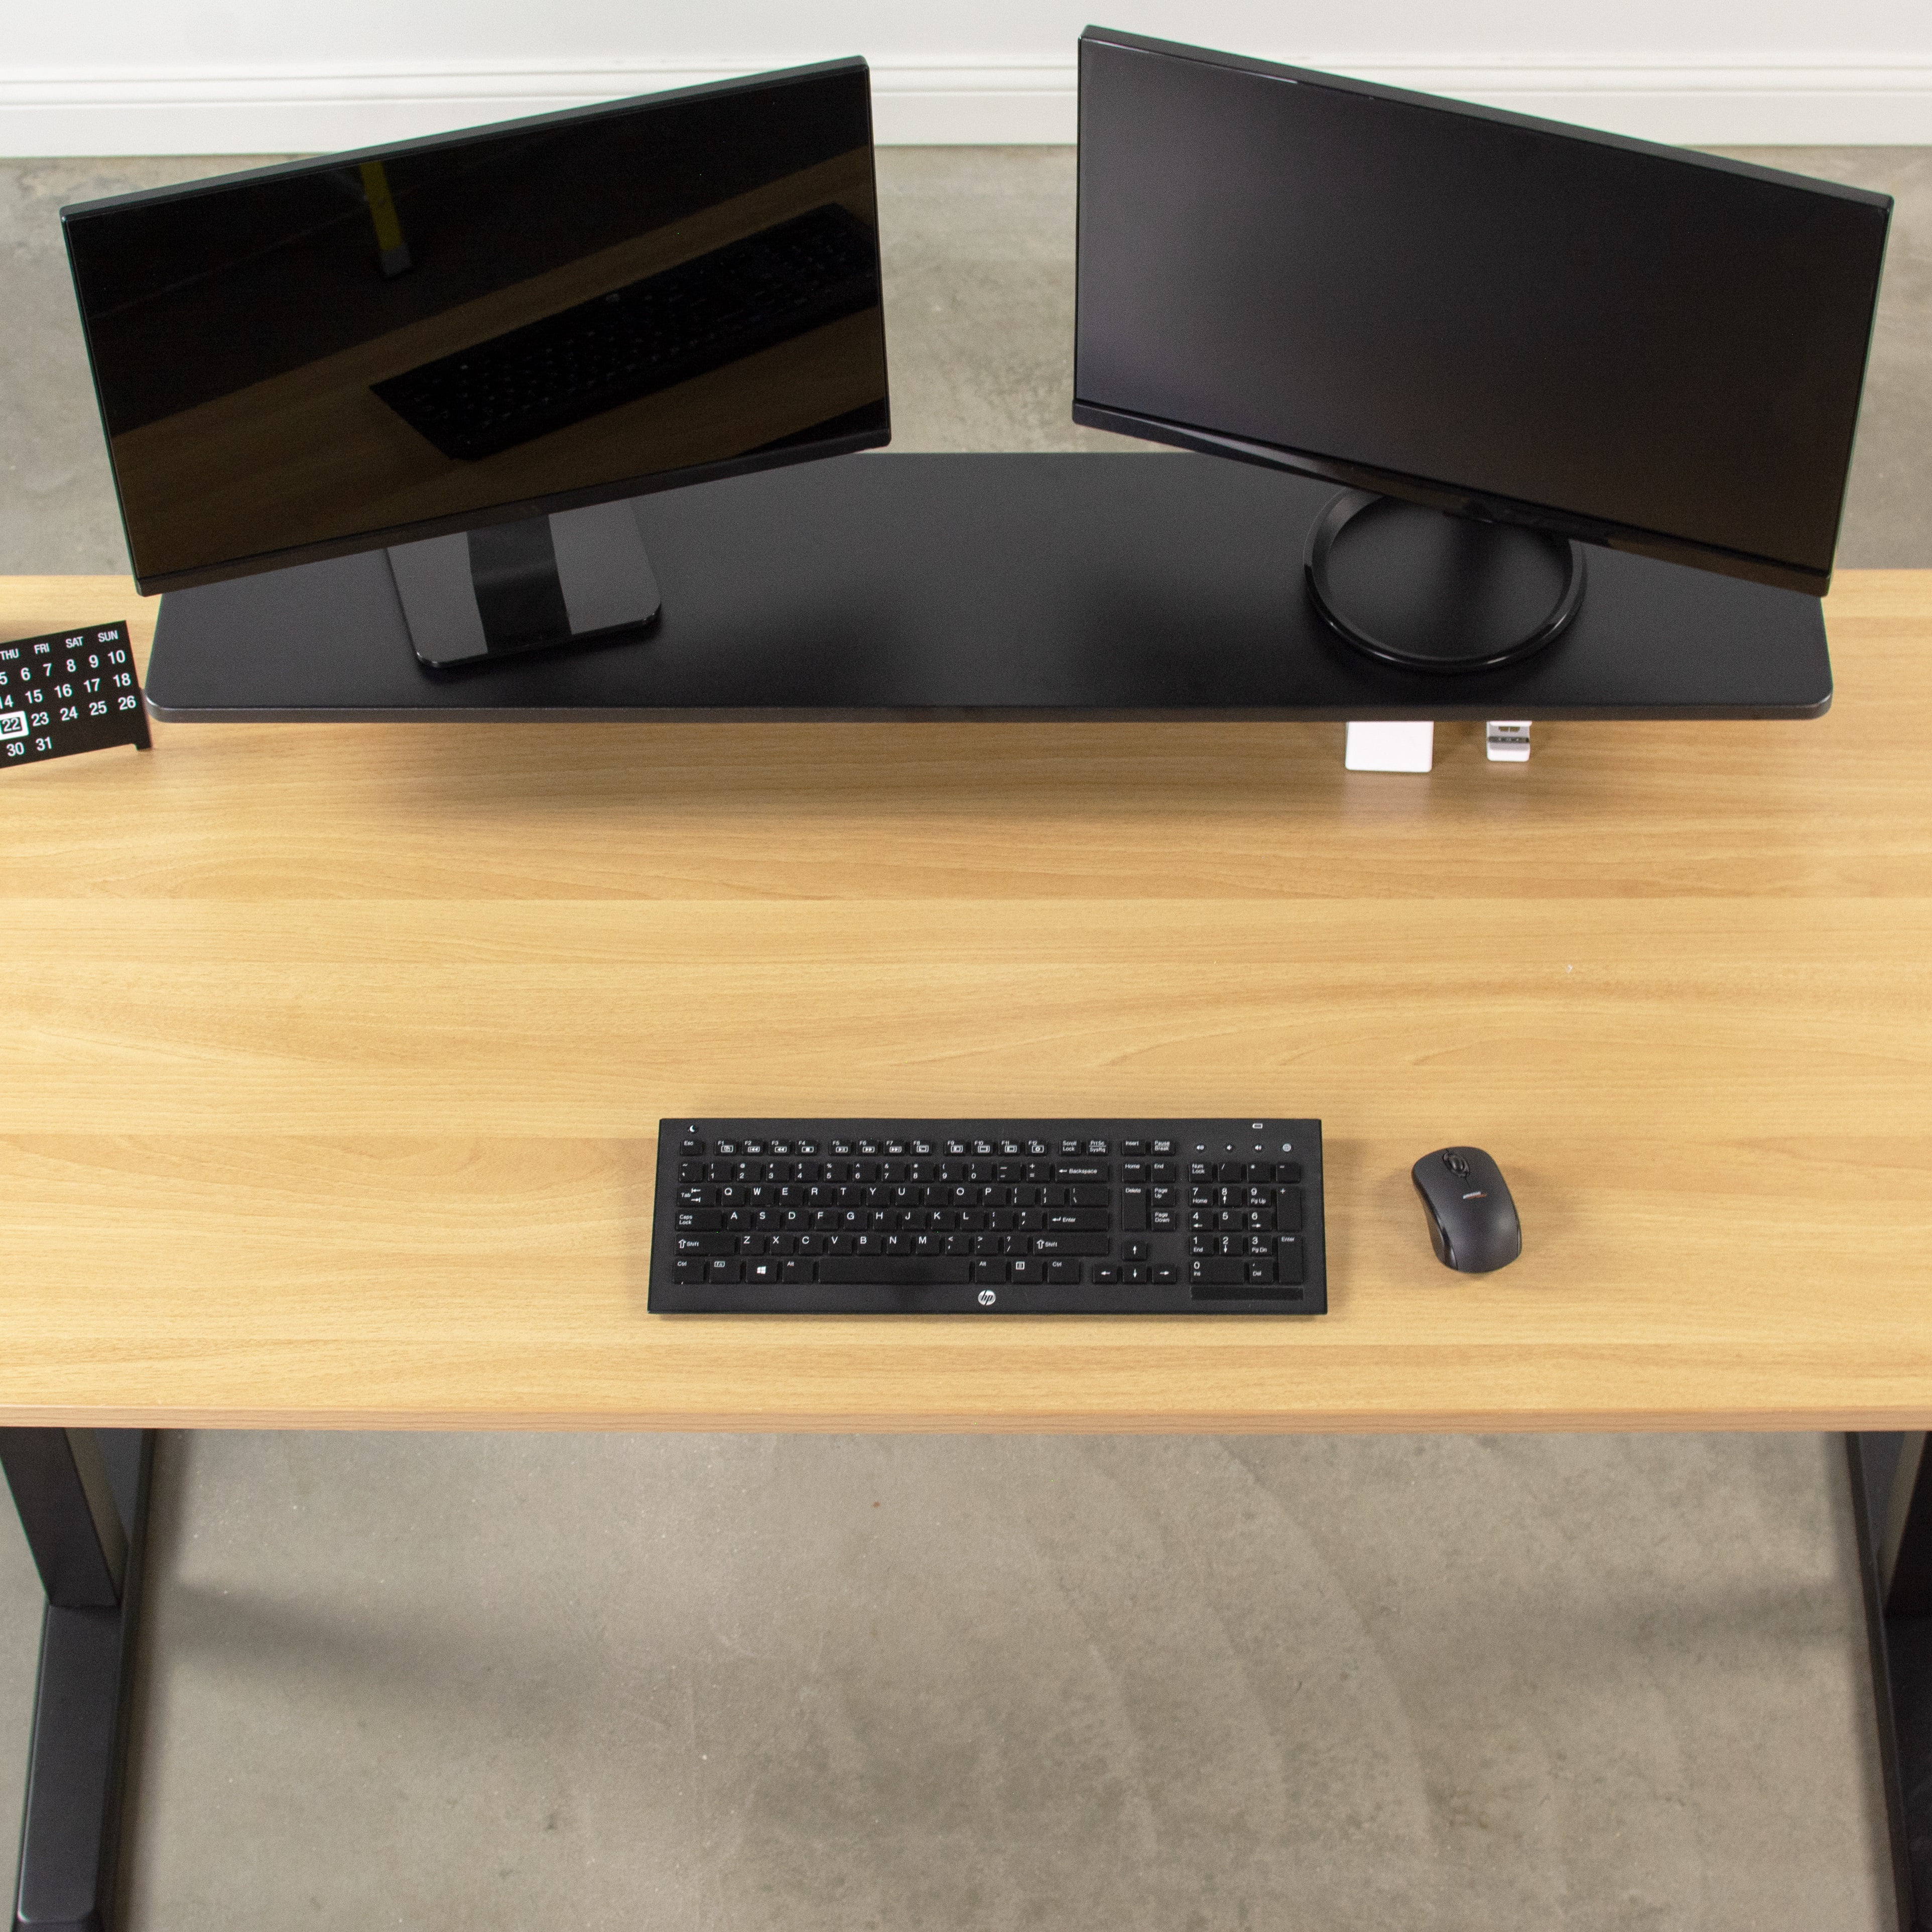  VIVO Large 42 inch Clamp-on Overhead Desk Shelf, Raised Desktop  Organizer, Elevated Workstation Accessory Platform, Black, DESK-SHELF42-OB  : Office Products